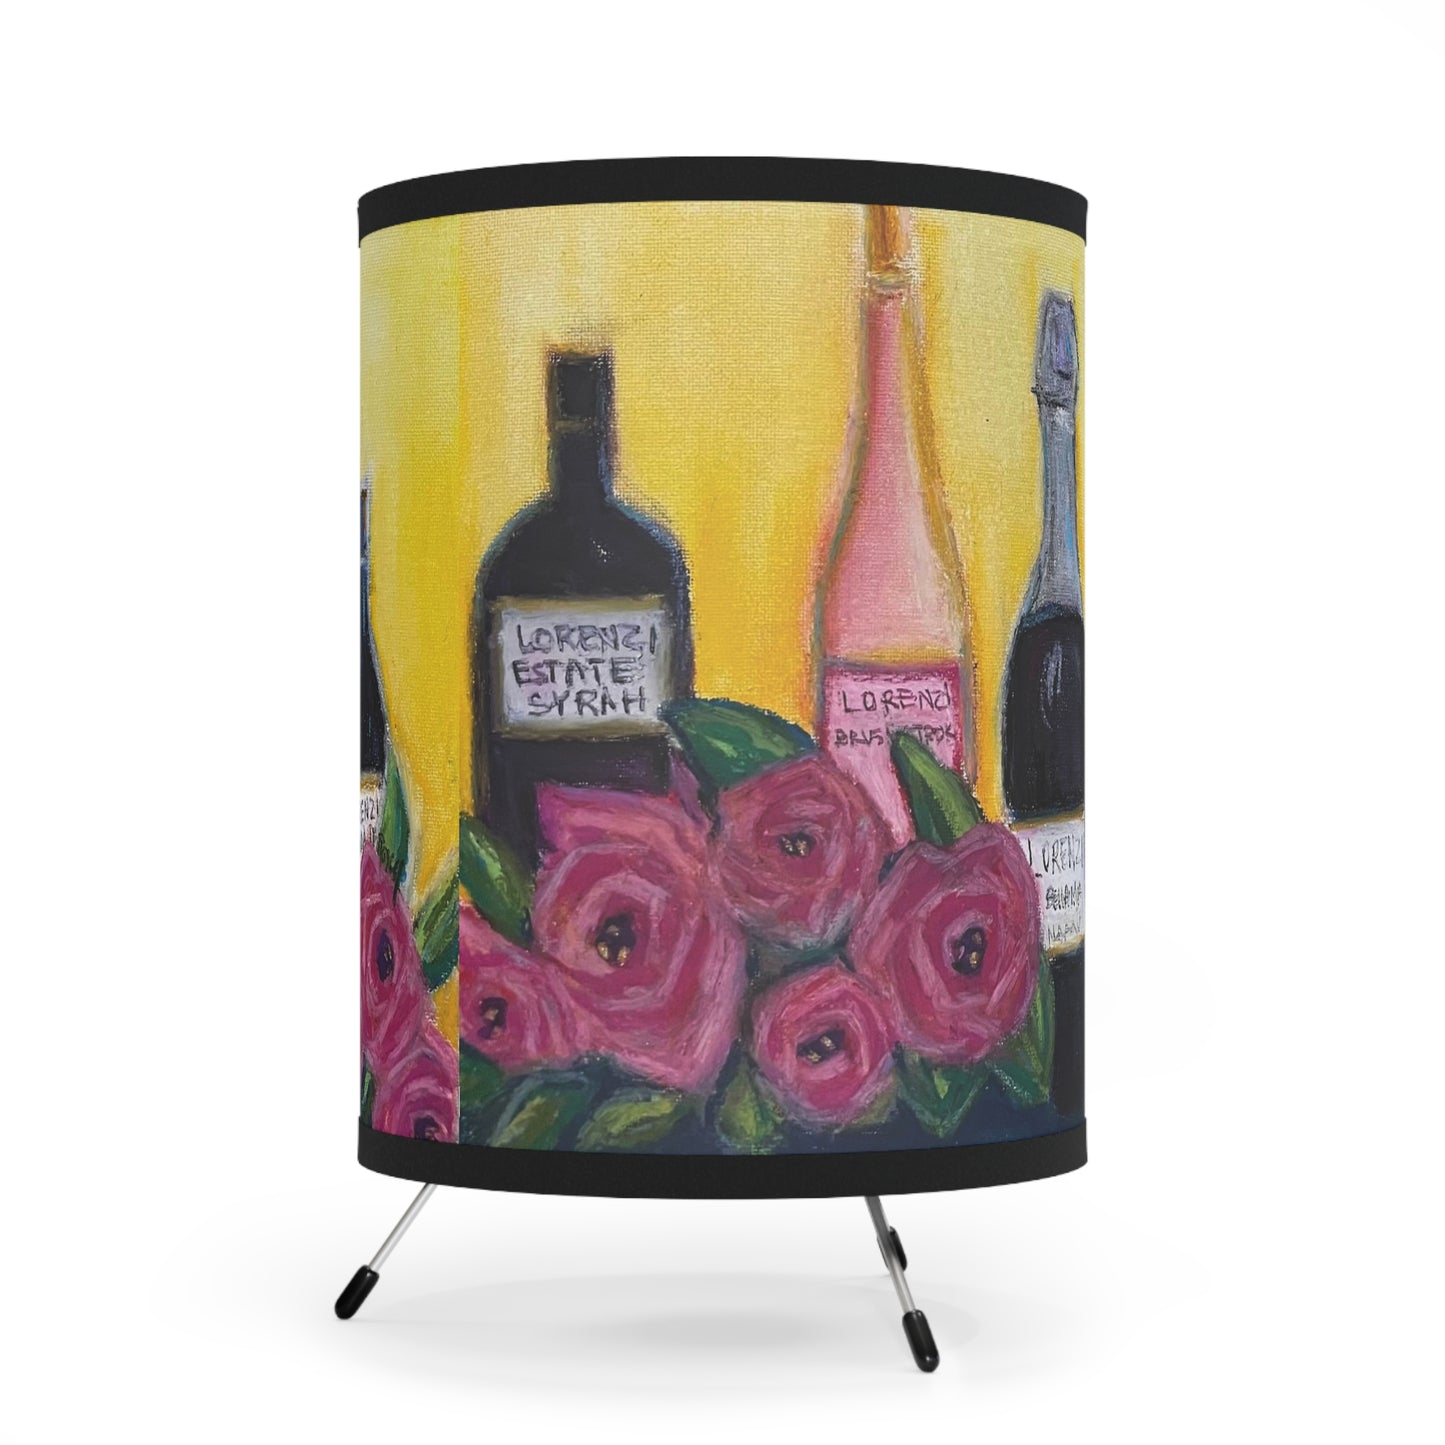 Lorenzi Estate Wine and Roses Tripod Lamp